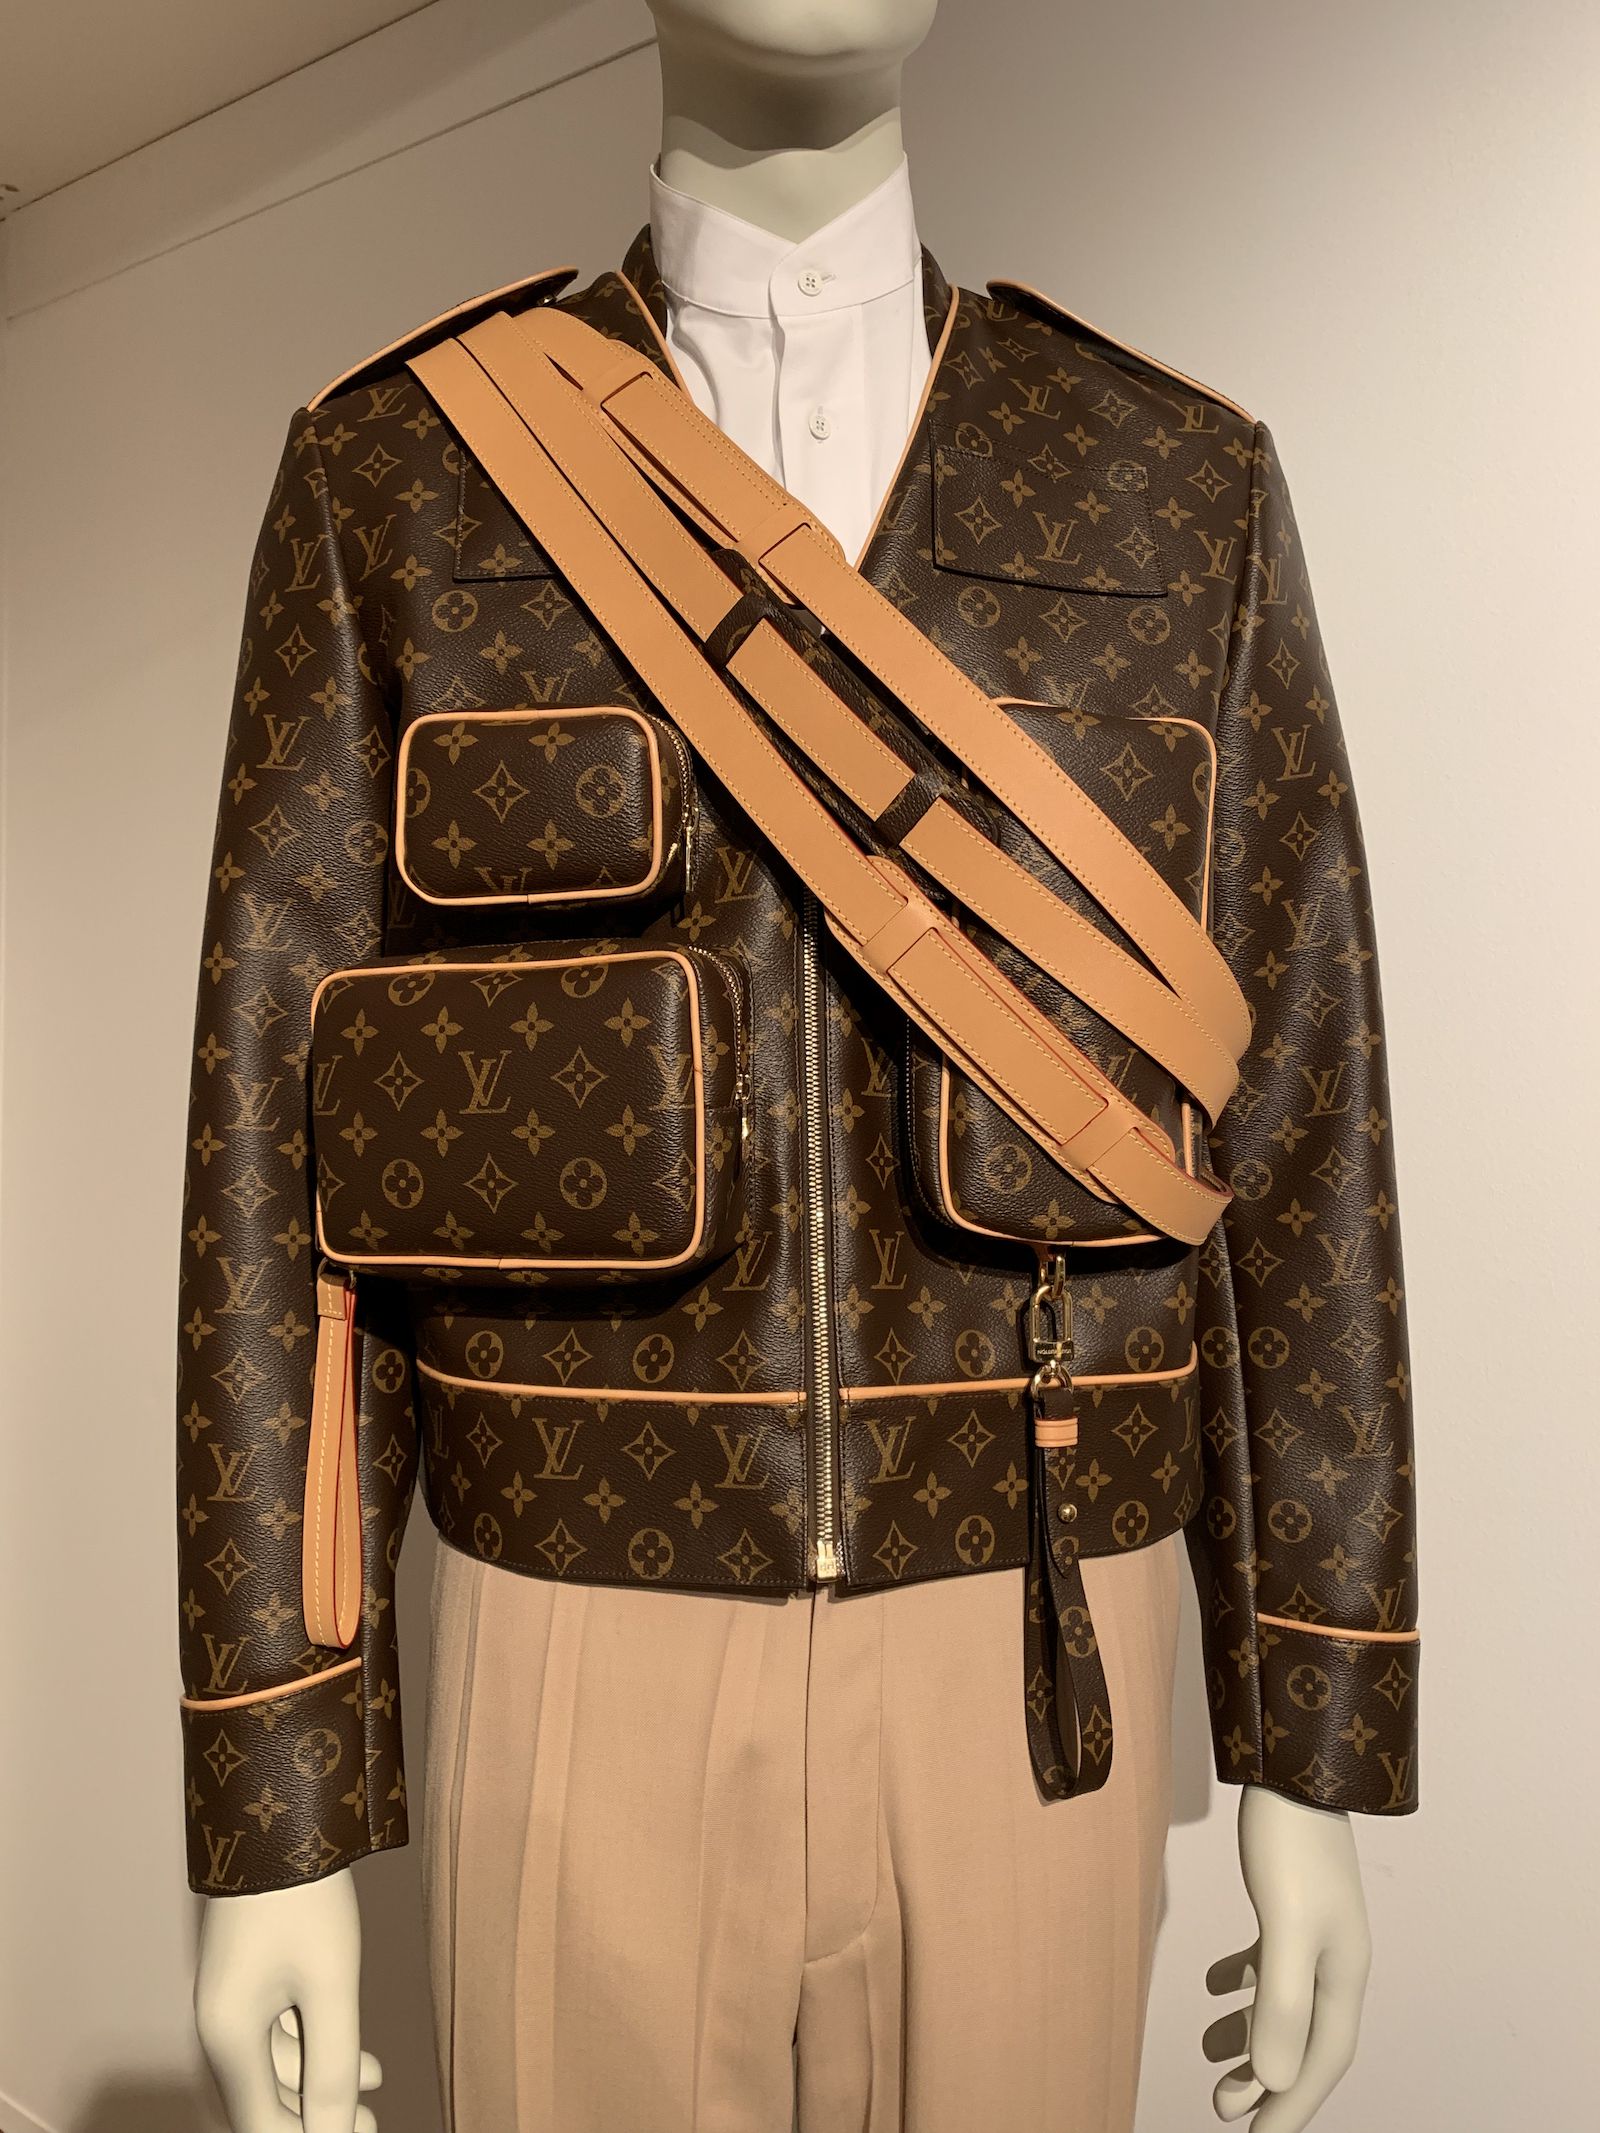 Ovrnundr on X: Louis Vuitton utility jacket by Virgil Abloh Photo:  lv_collectibles  / X